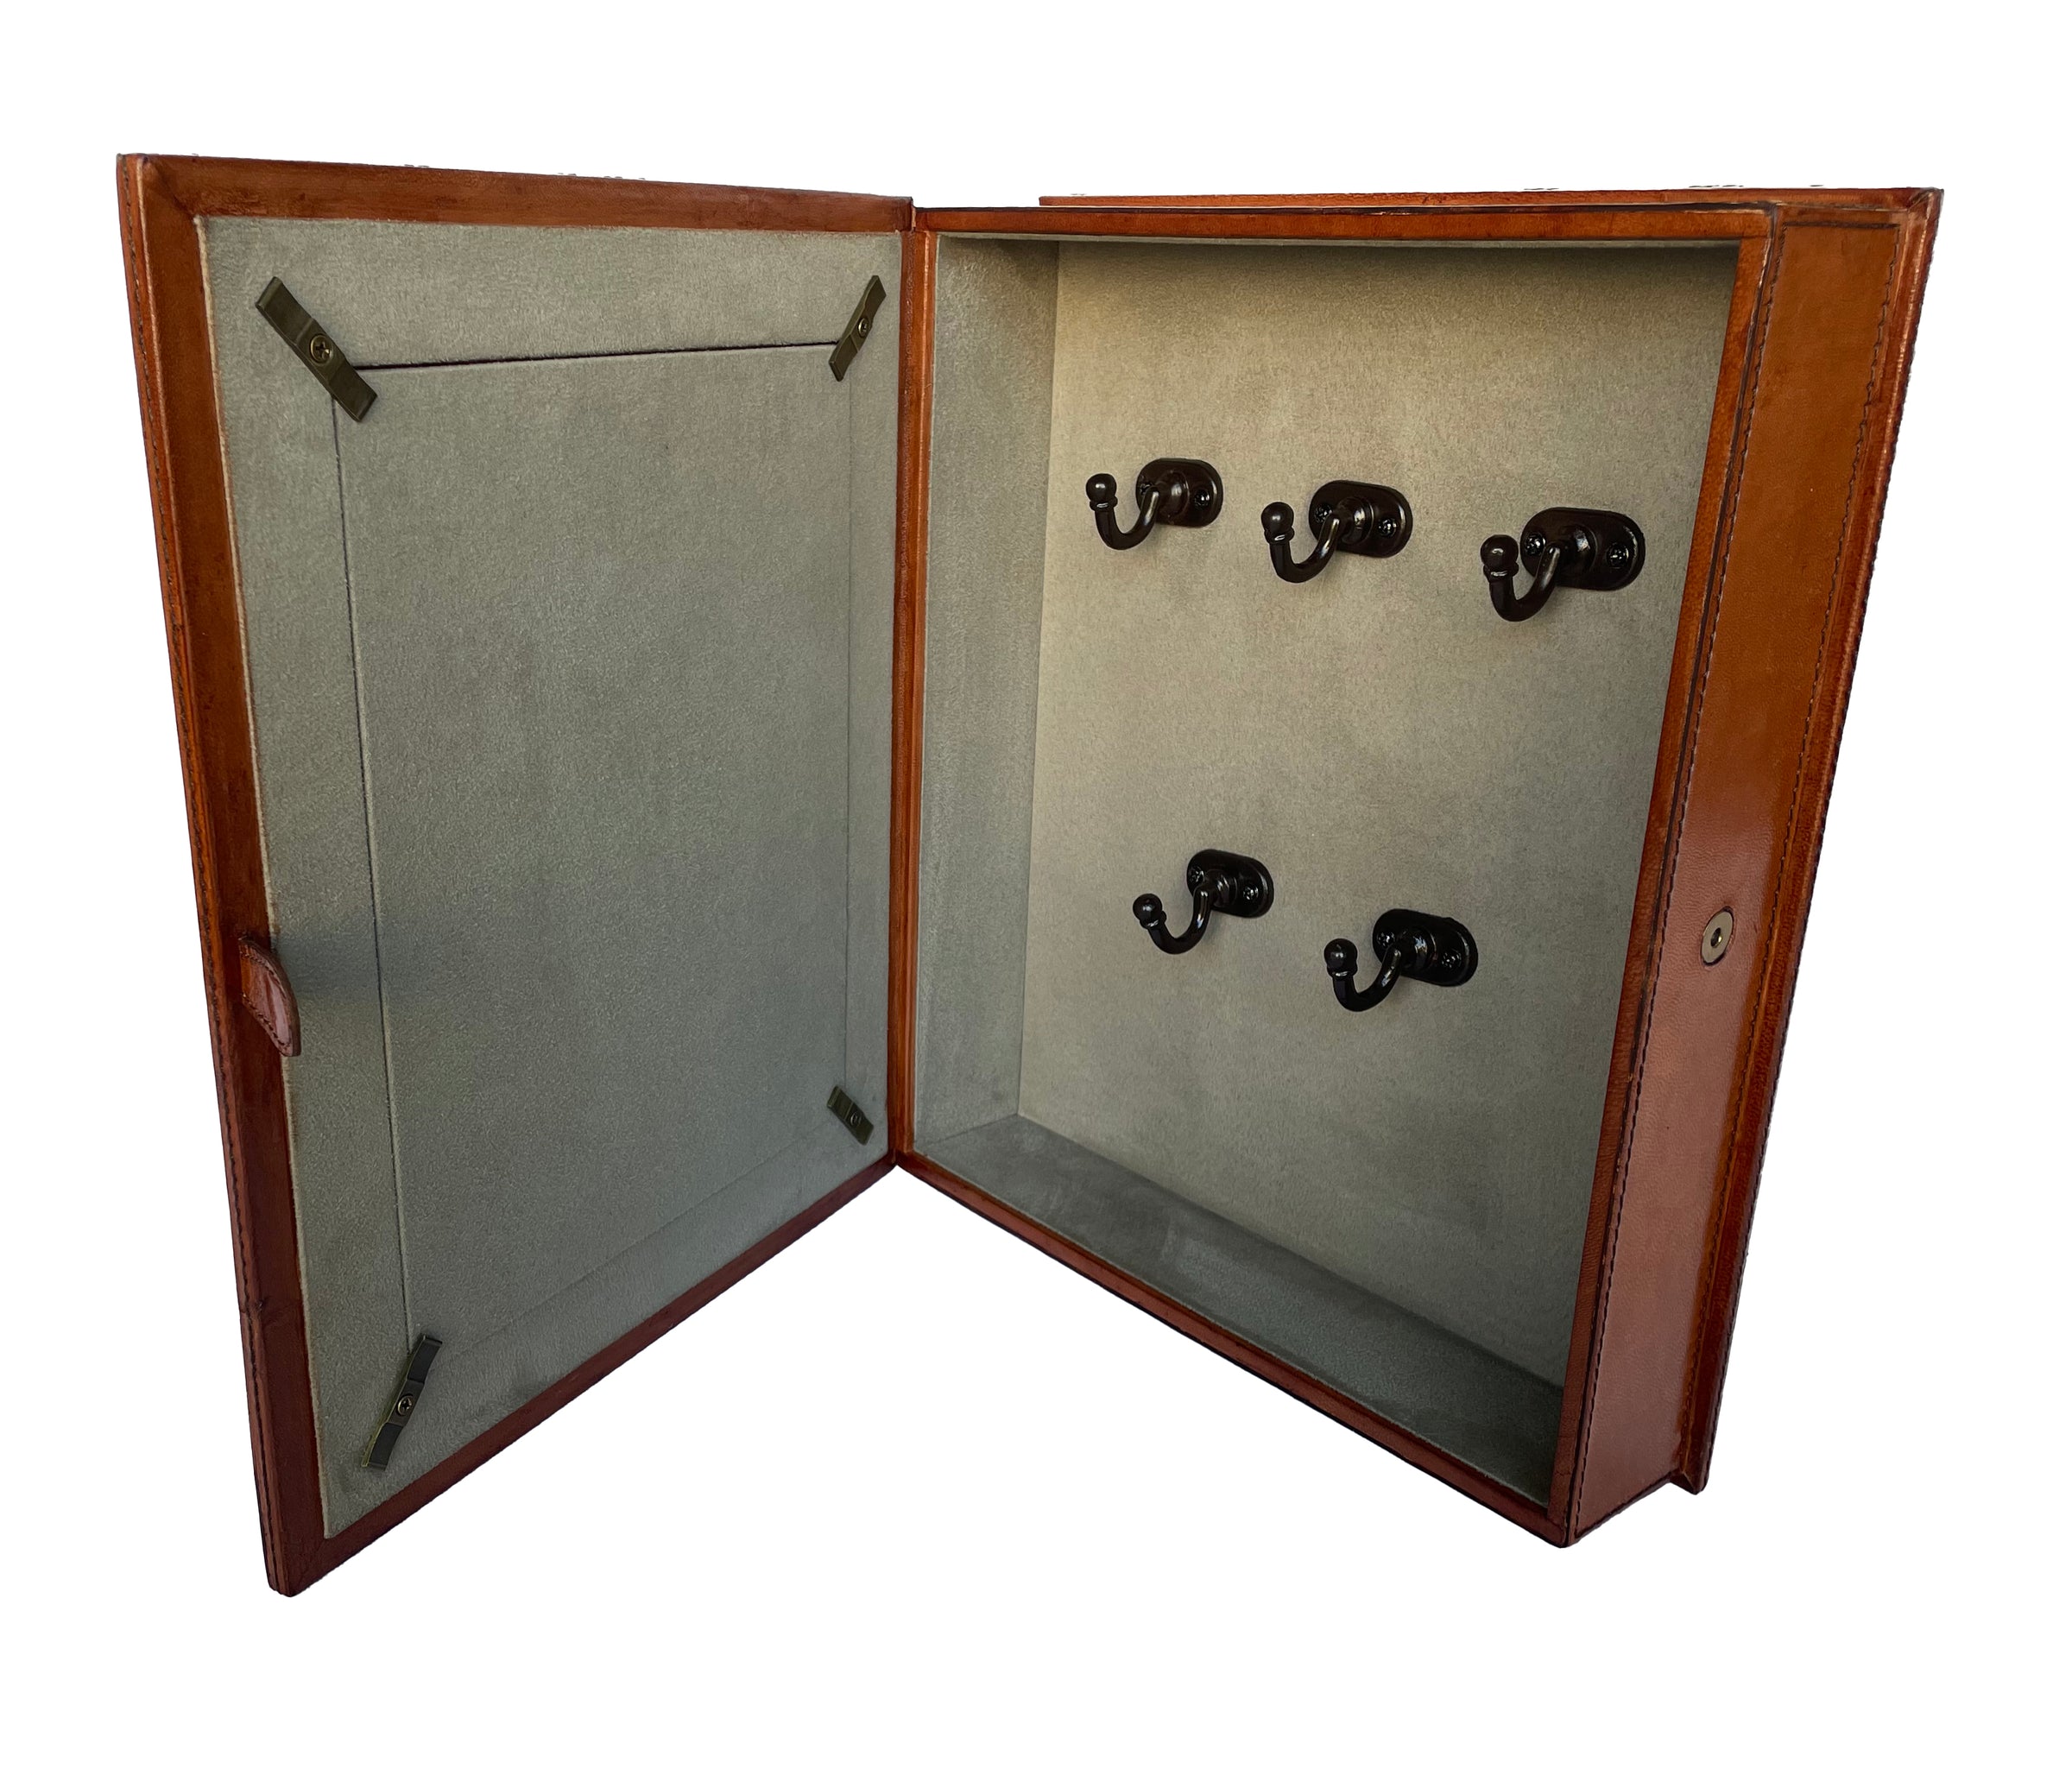 Elsa Key Holder Box in Tan Leather - Large - Notbrand